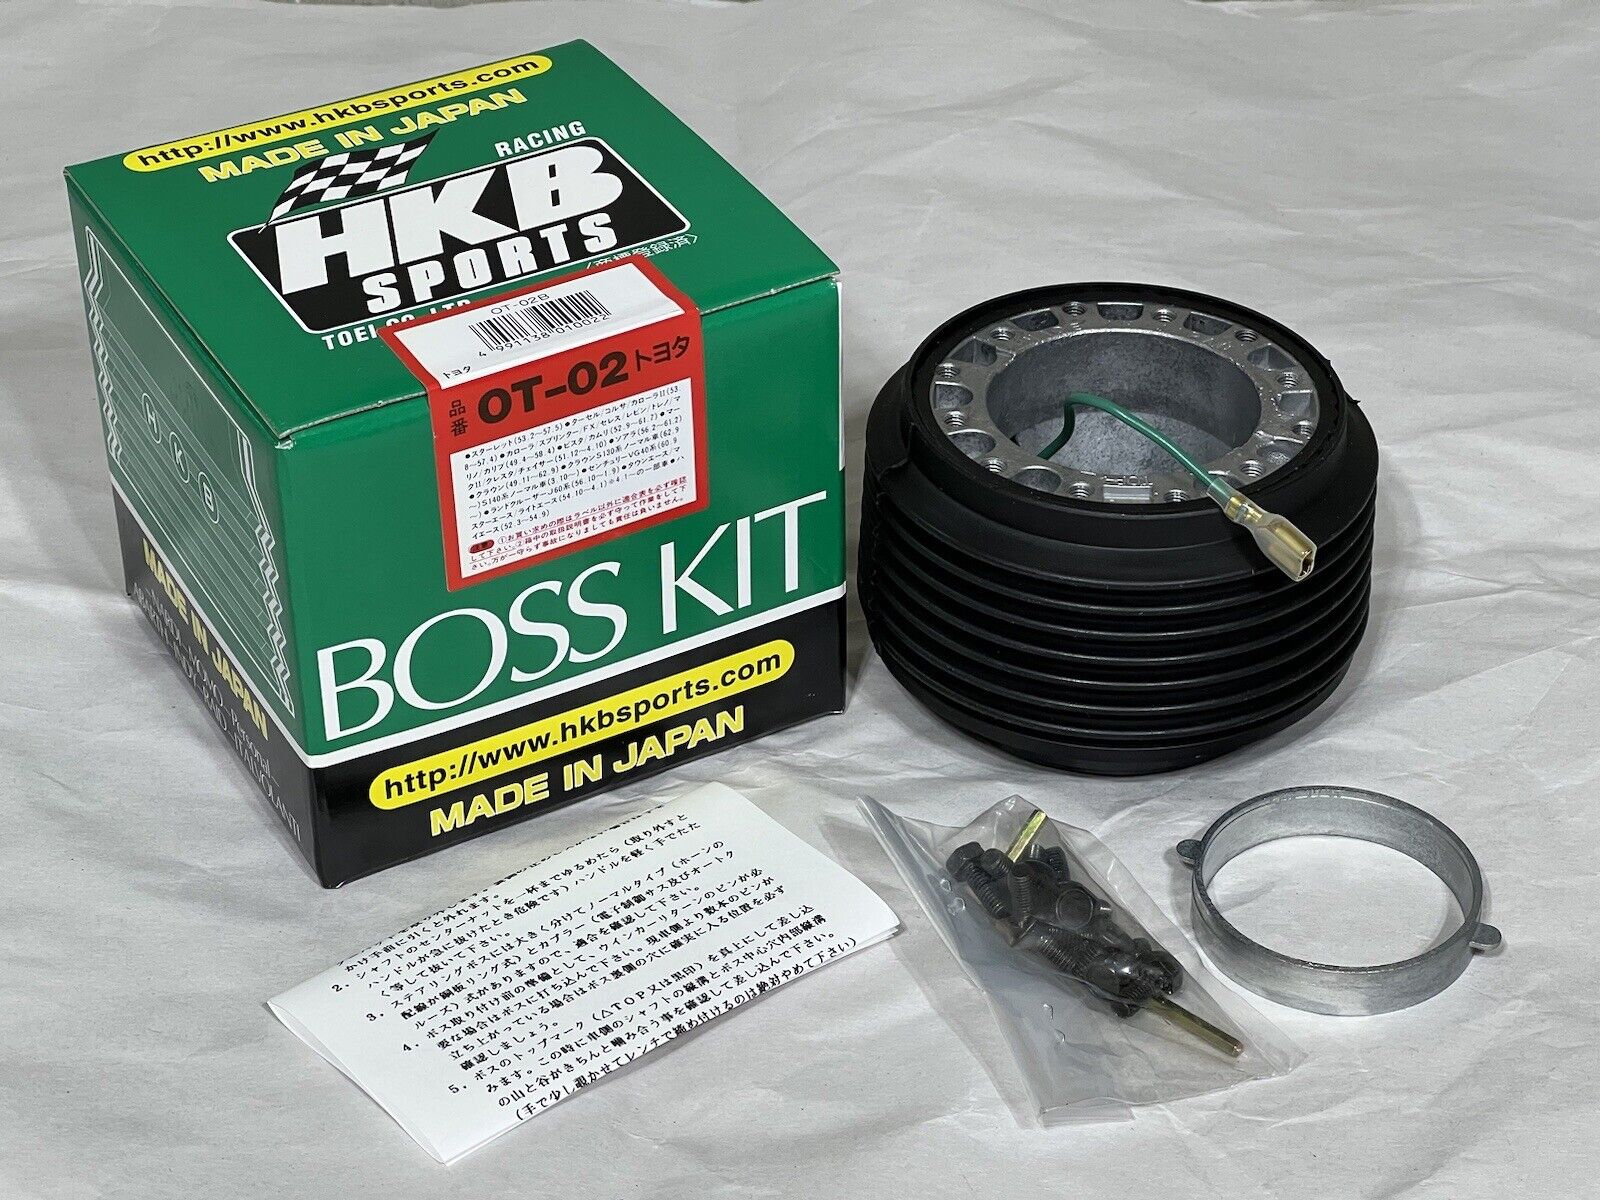 HKB SPORTS Steering Wheel Adapter Kit Boss Kit 81-85 Toyota Soarer GZ10